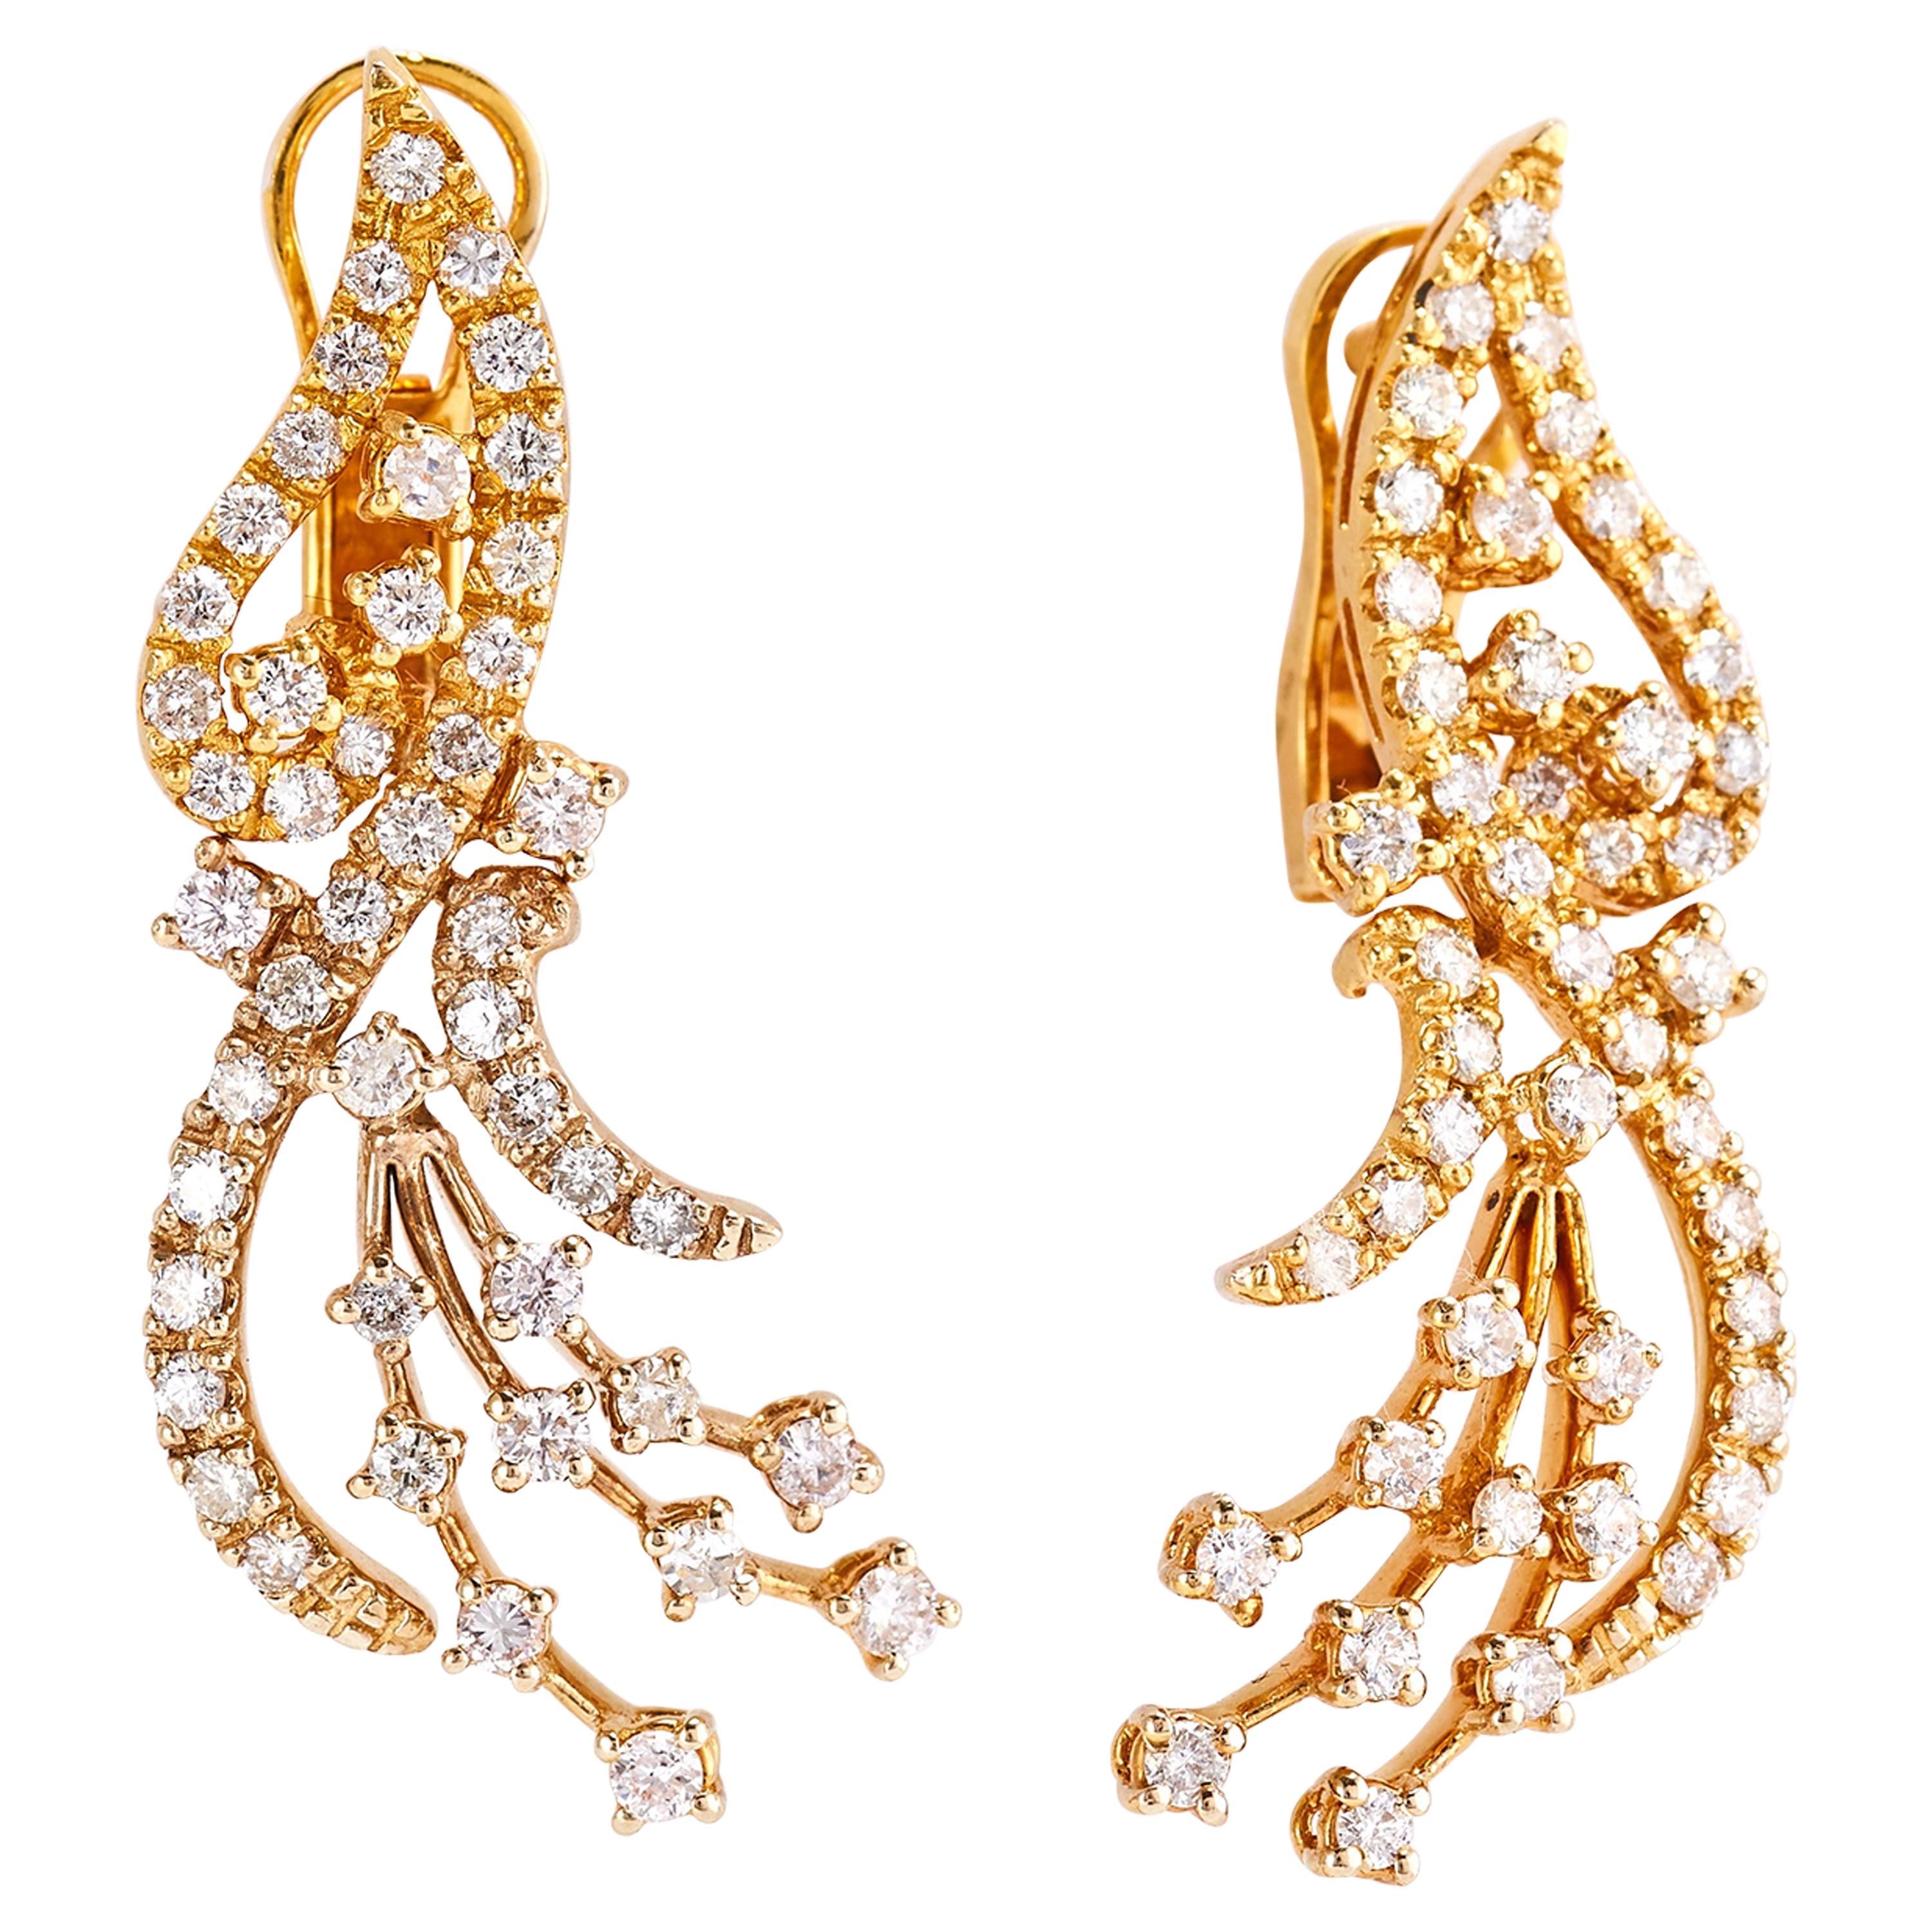 Pair of Glorious 18 Karat Yellow Gold Earrings with 2.70 Carat of Diamonds